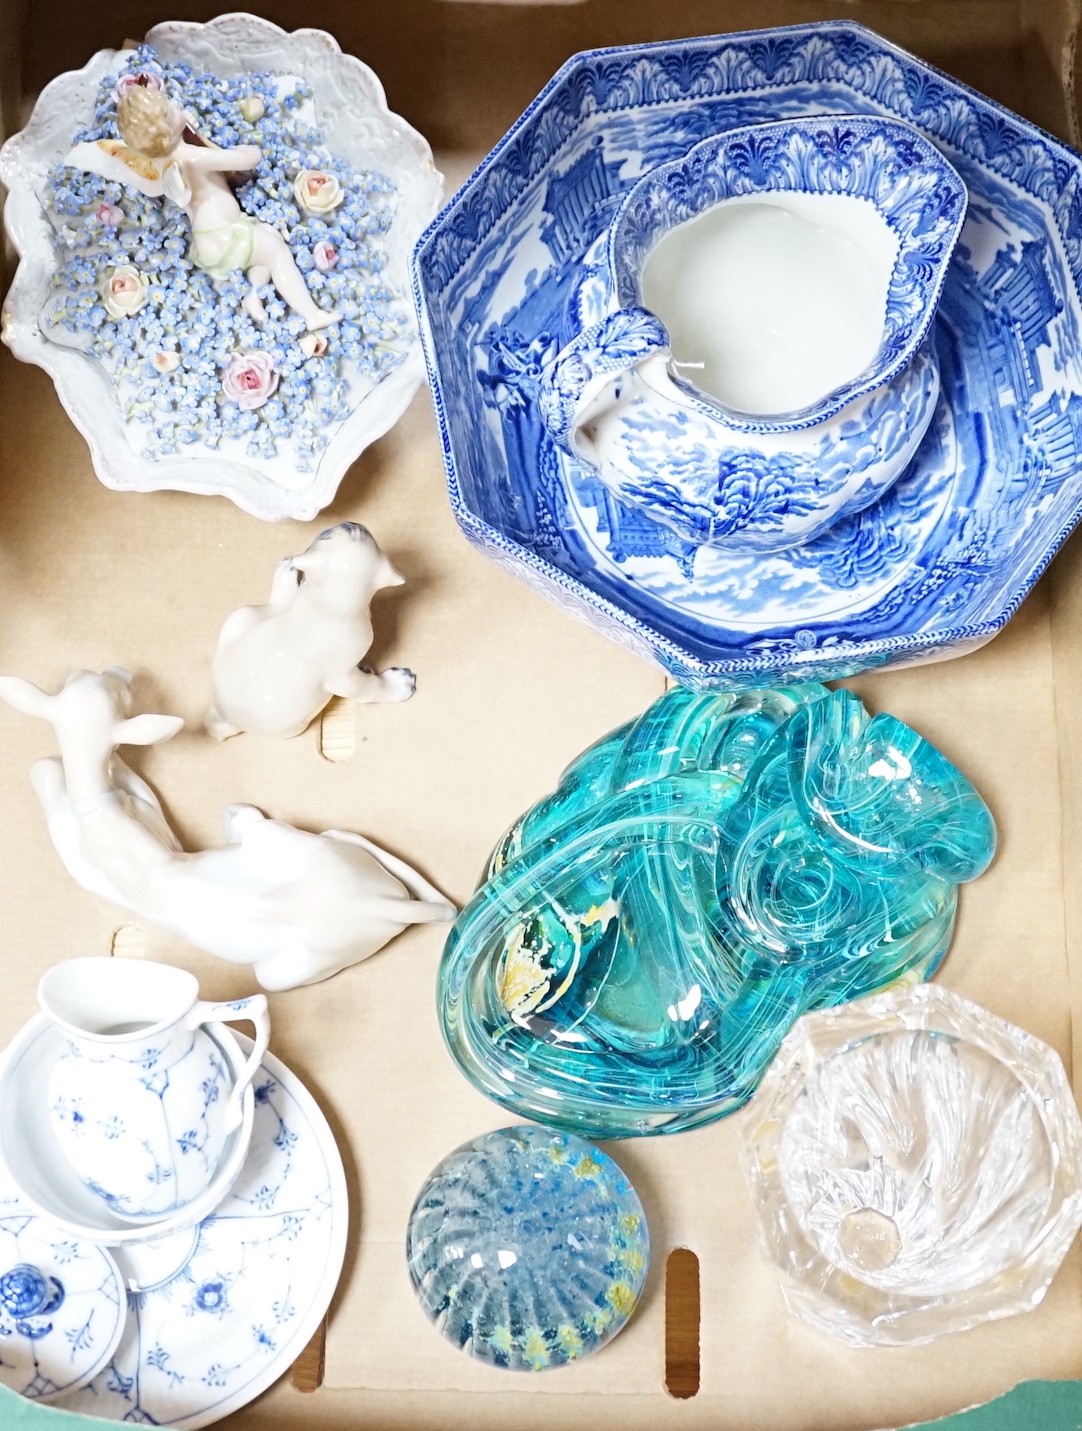 A quantity of mixed ceramics and glassware